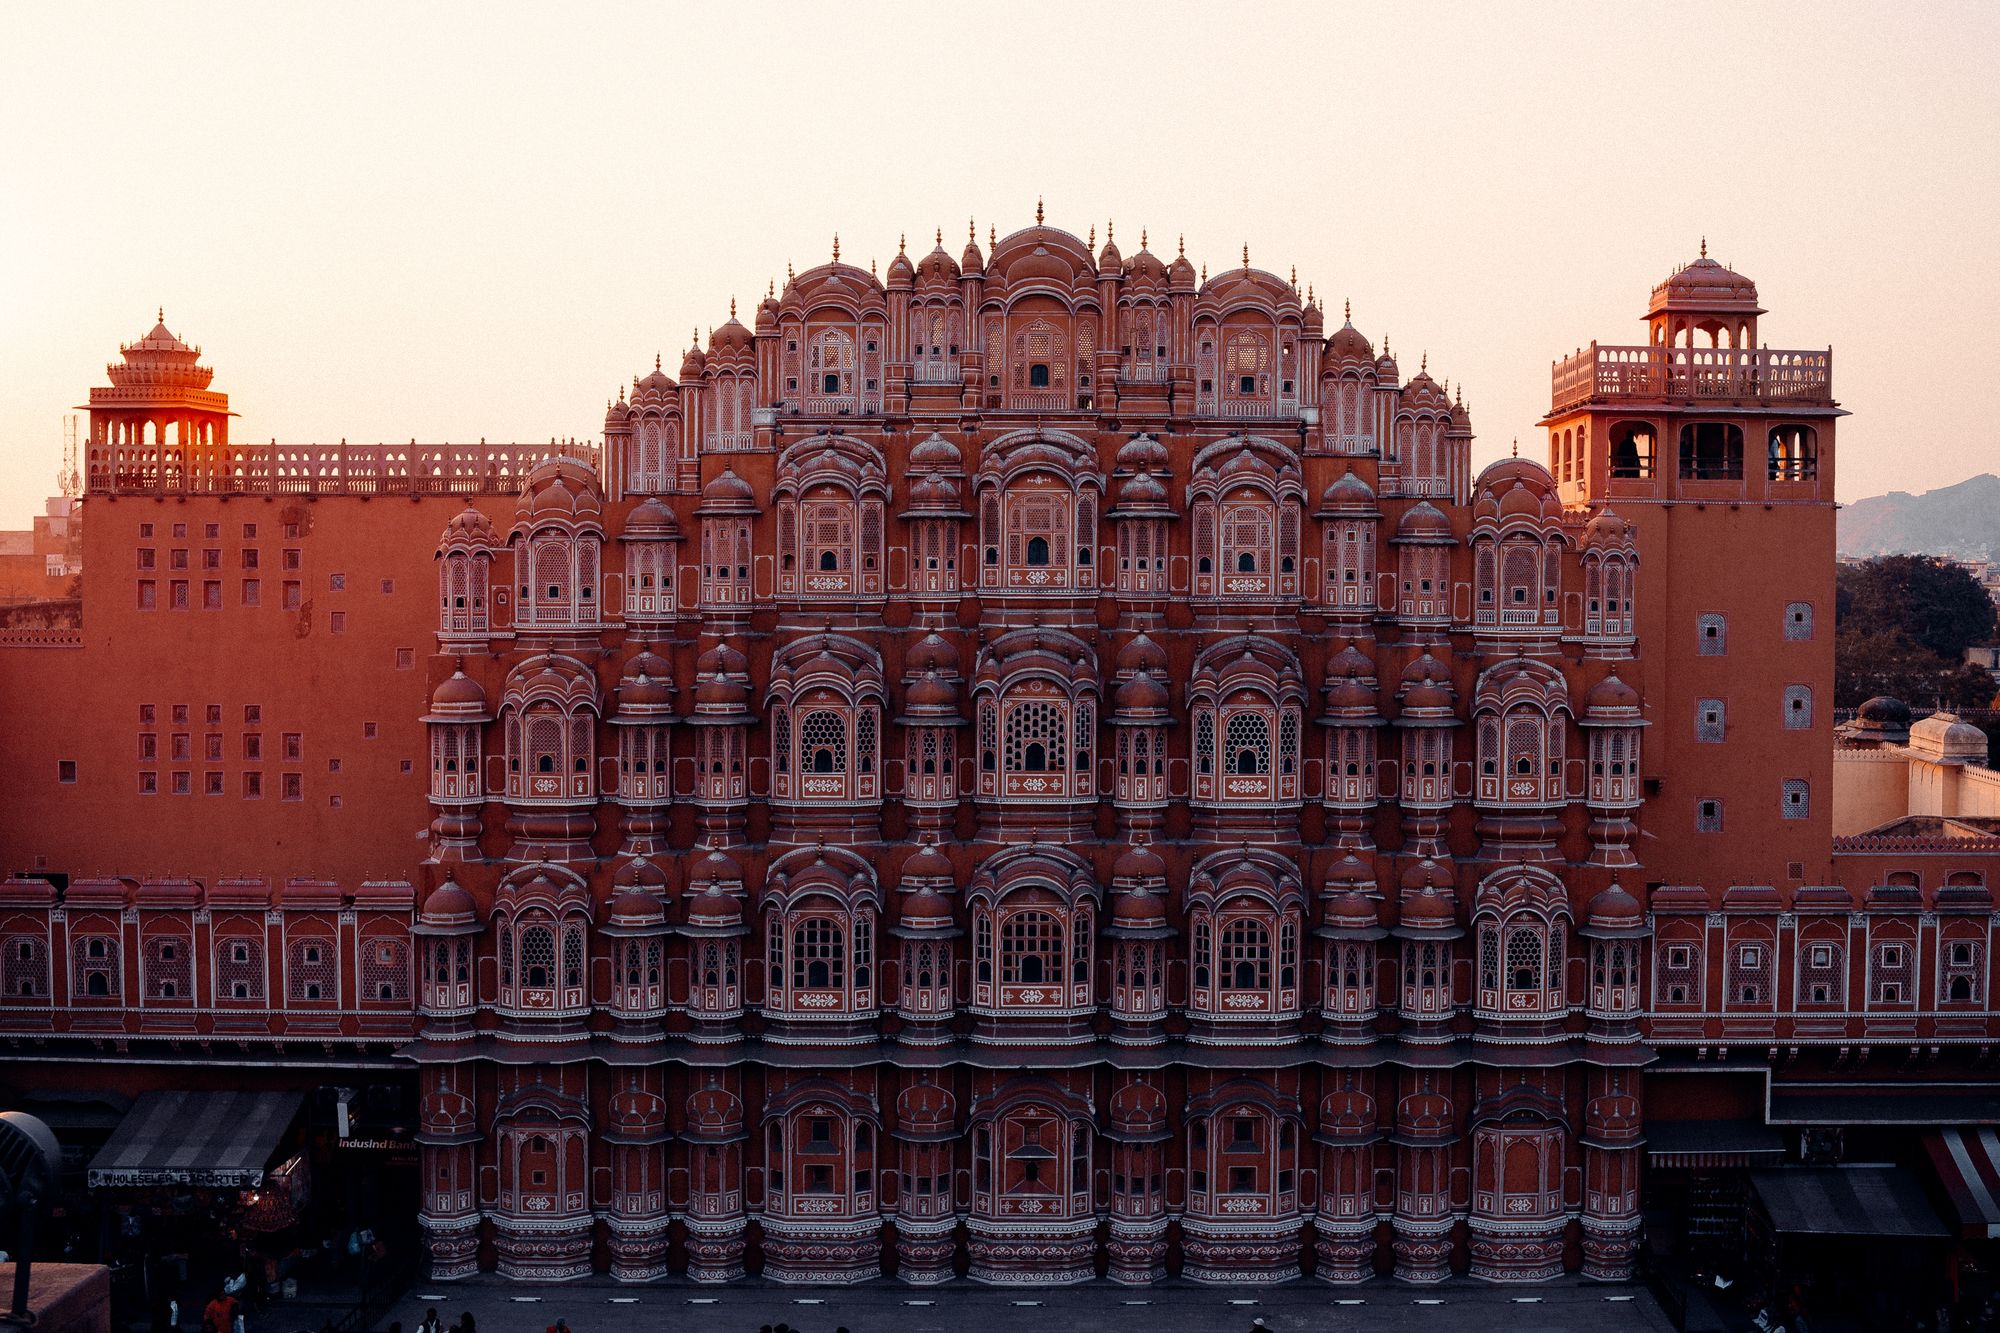 Discovering India's Experiential Treasures